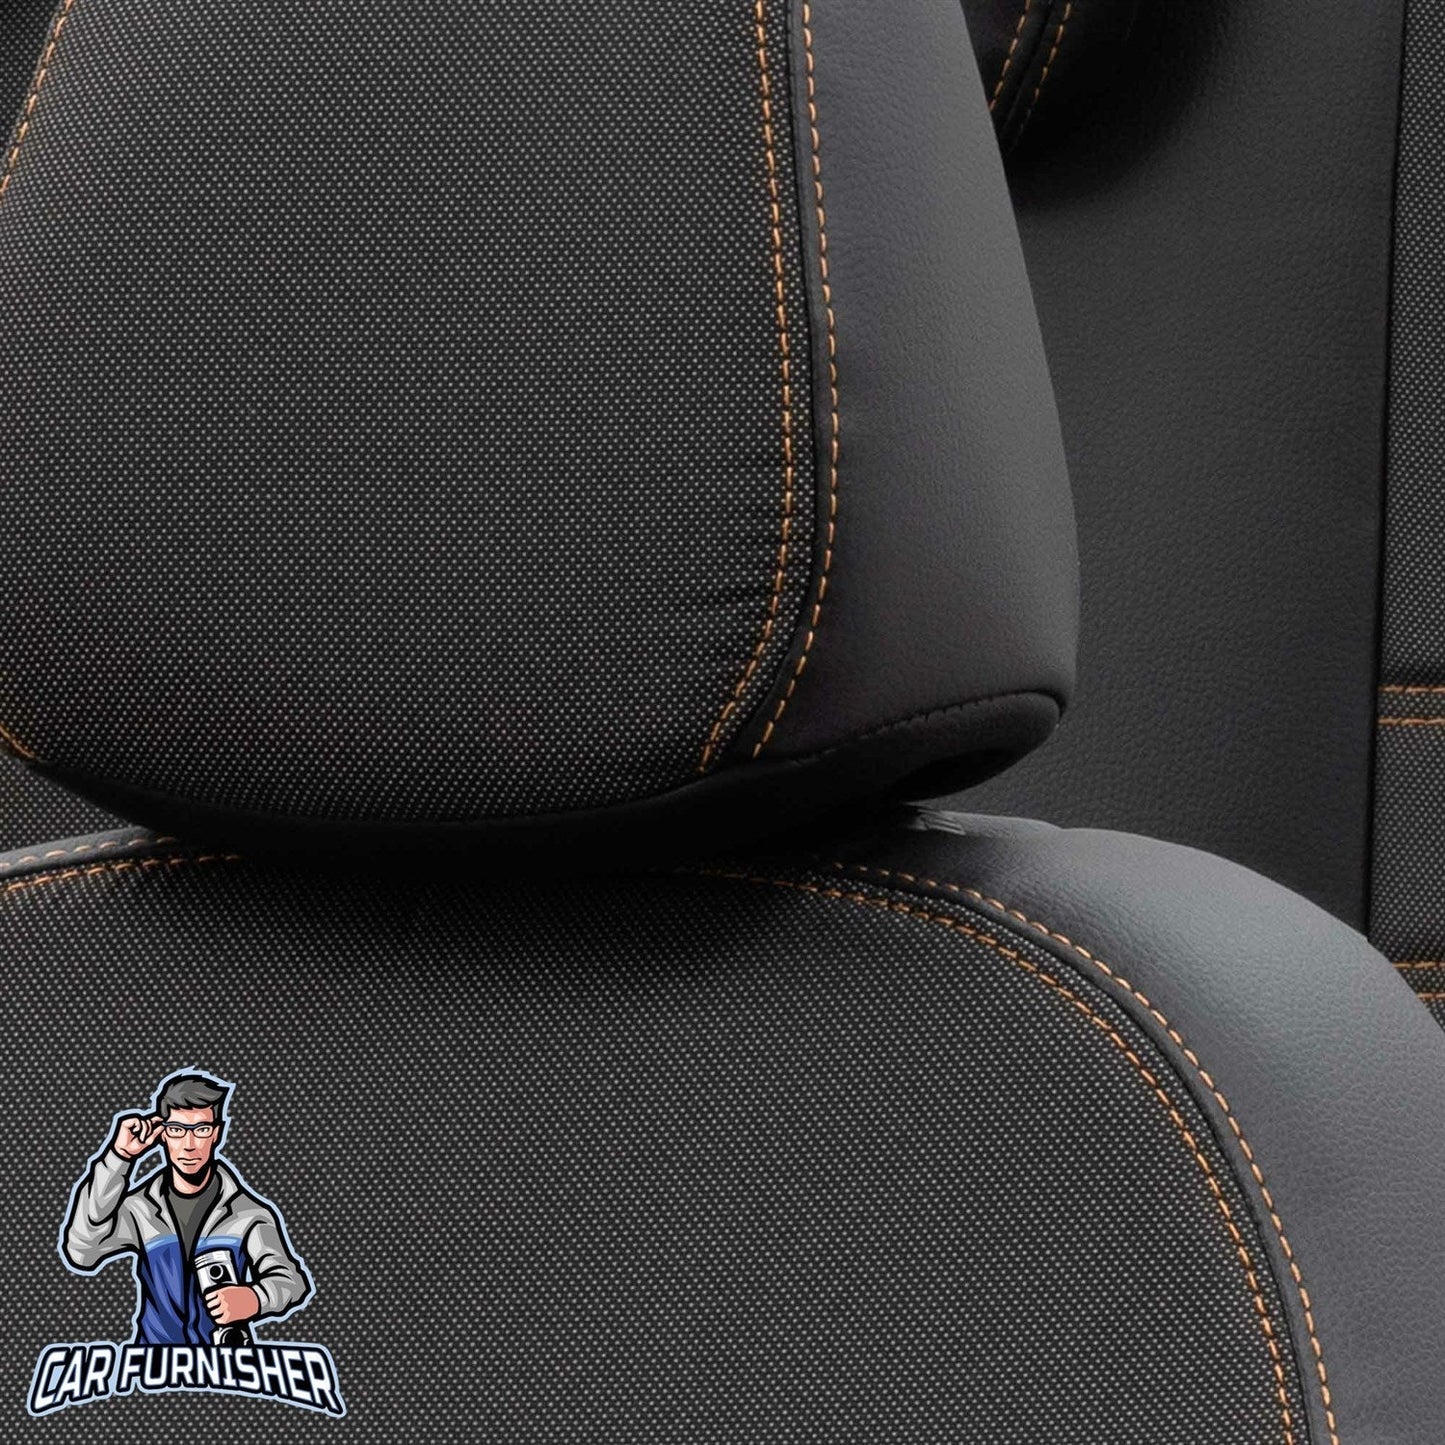 Ford B-Max Seat Covers Paris Leather & Jacquard Design Dark Beige Leather & Jacquard Fabric